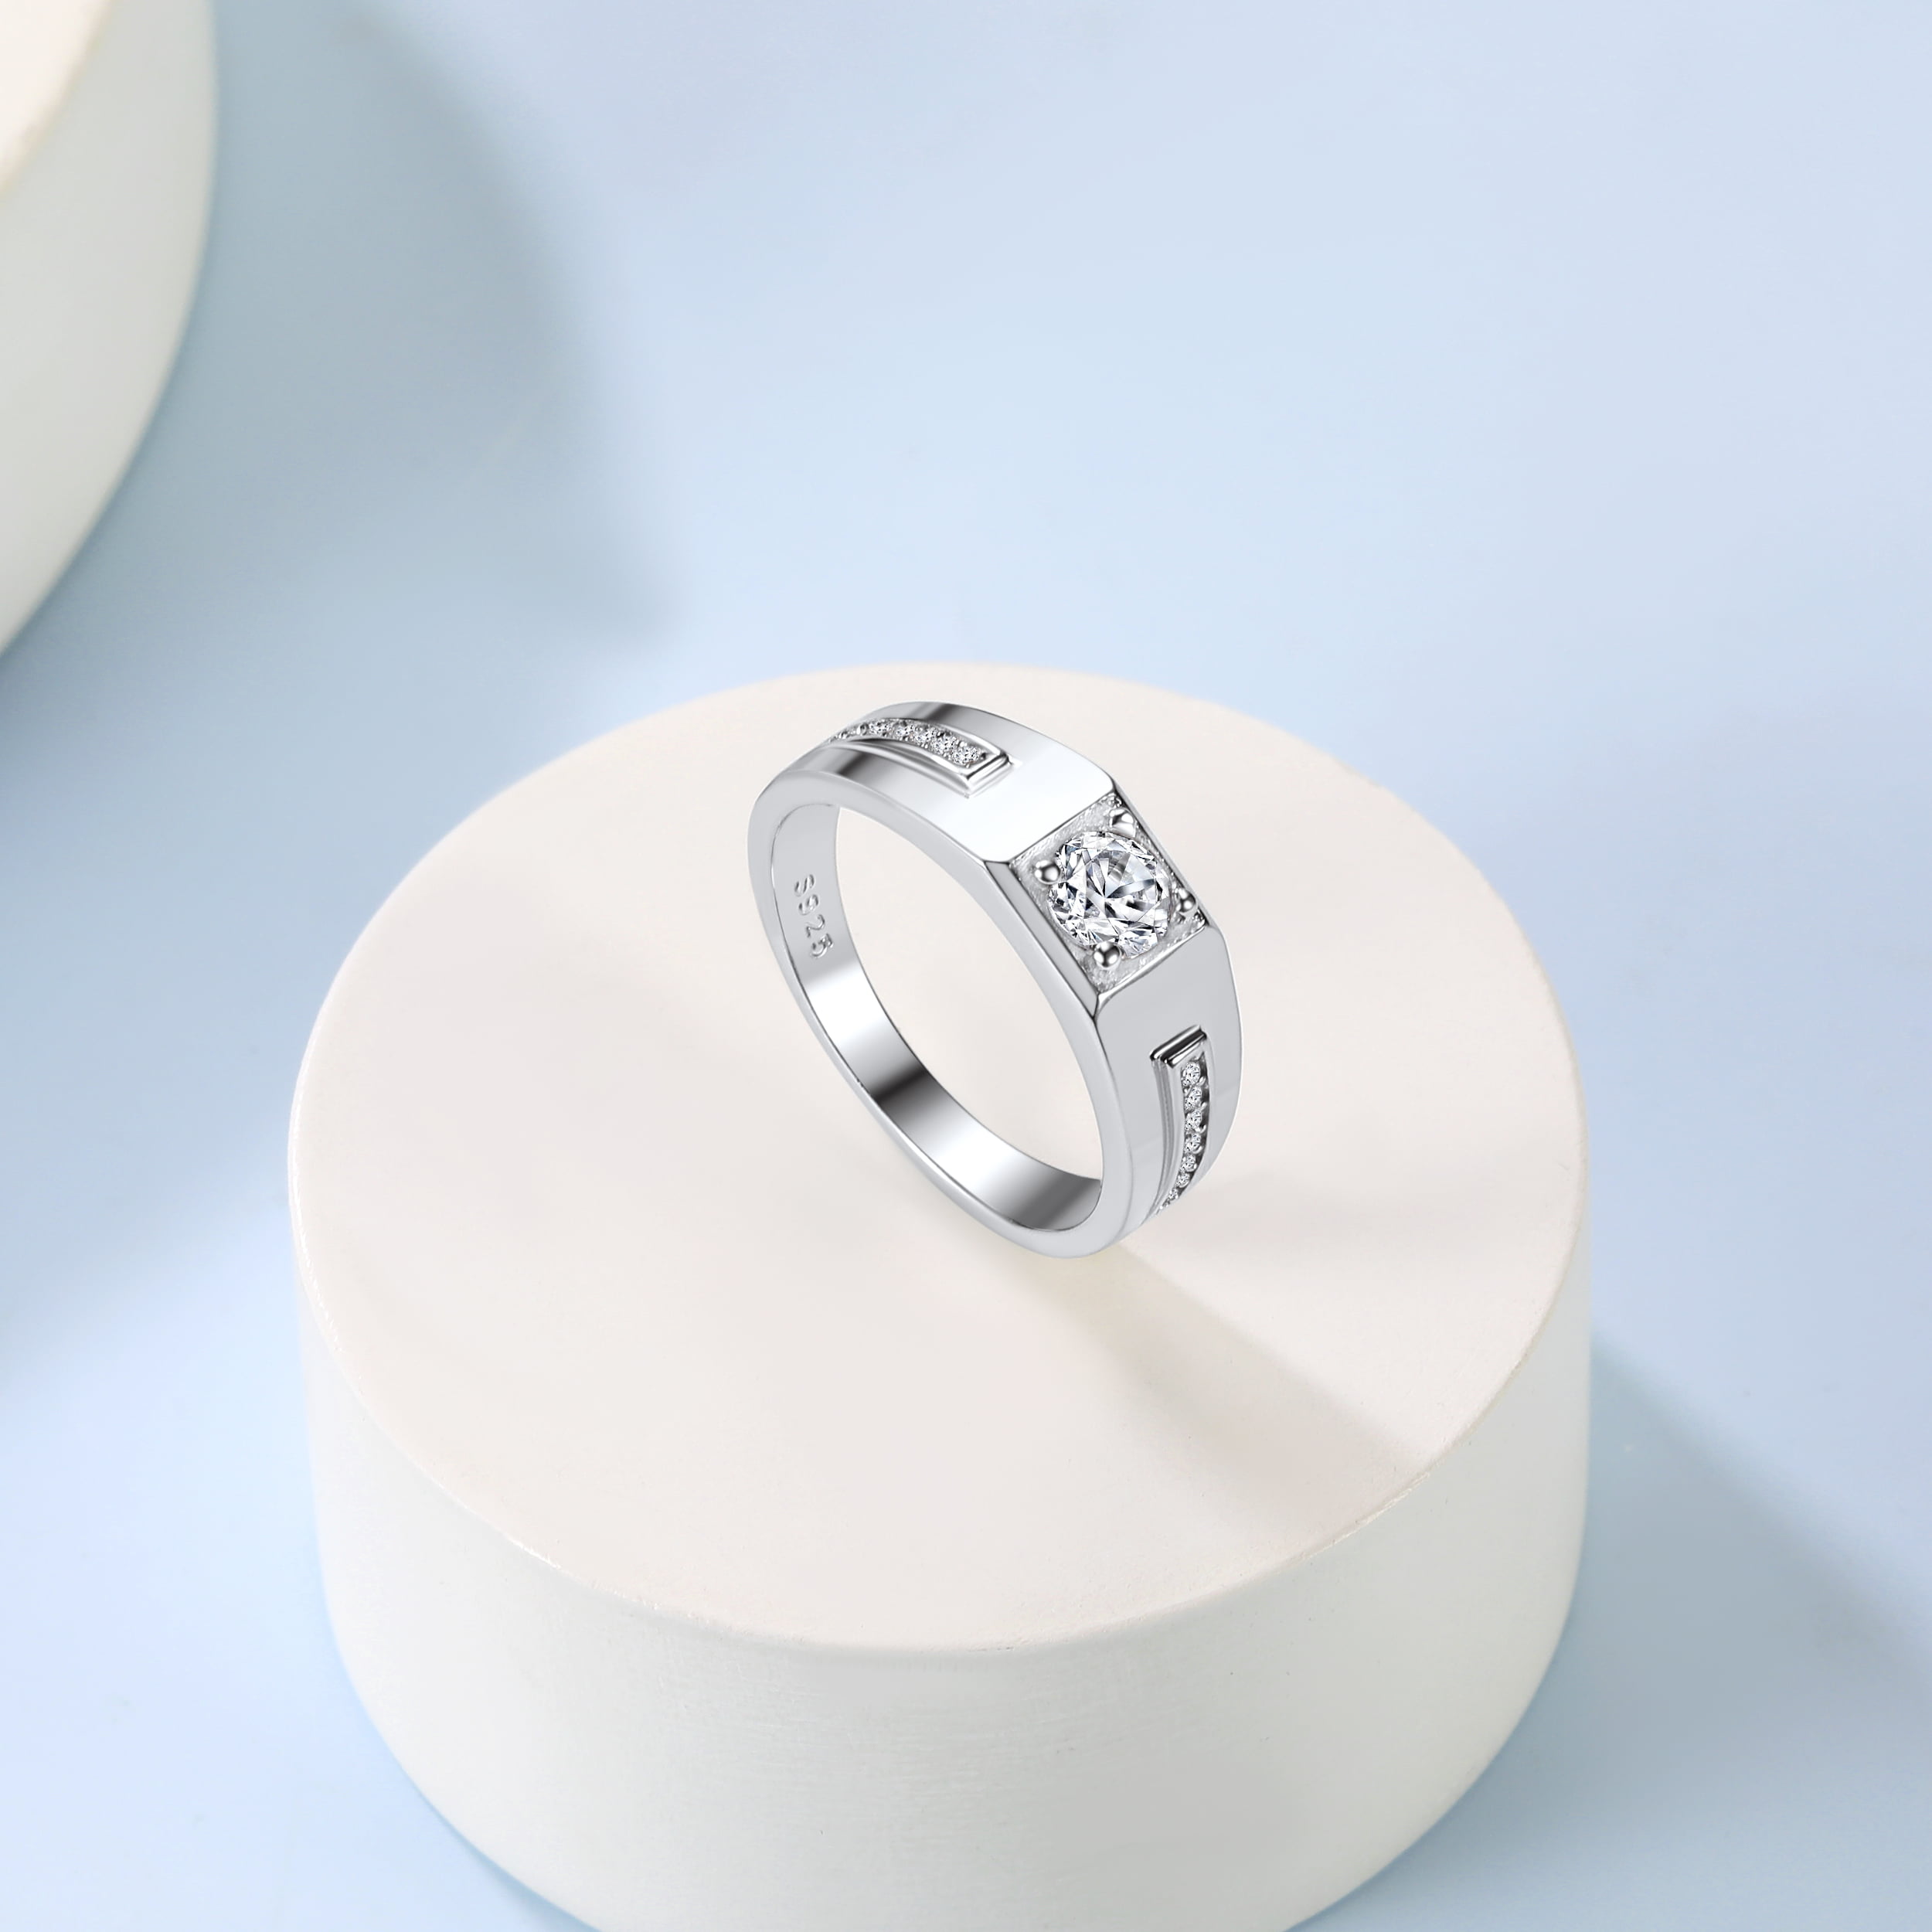 Designer 92.5 Sterling Silver Ring For Men Love Letters at Rs 100/gram |  925 खरी चांदी की अंगूठी in New Delhi | ID: 19871703433